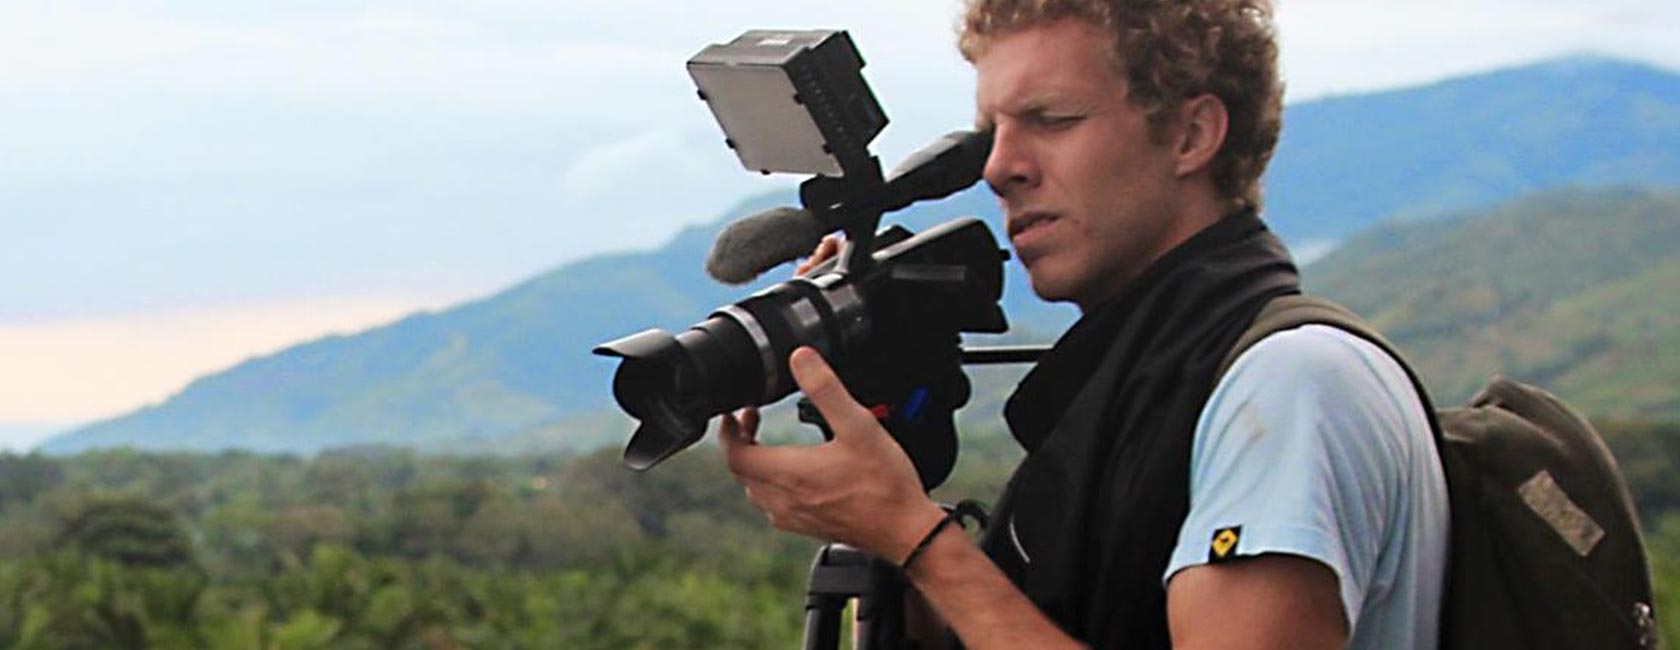 Director Jesse Freeston filming in Bajo Aguán, Honduras. (Photo by Armando Estrada)